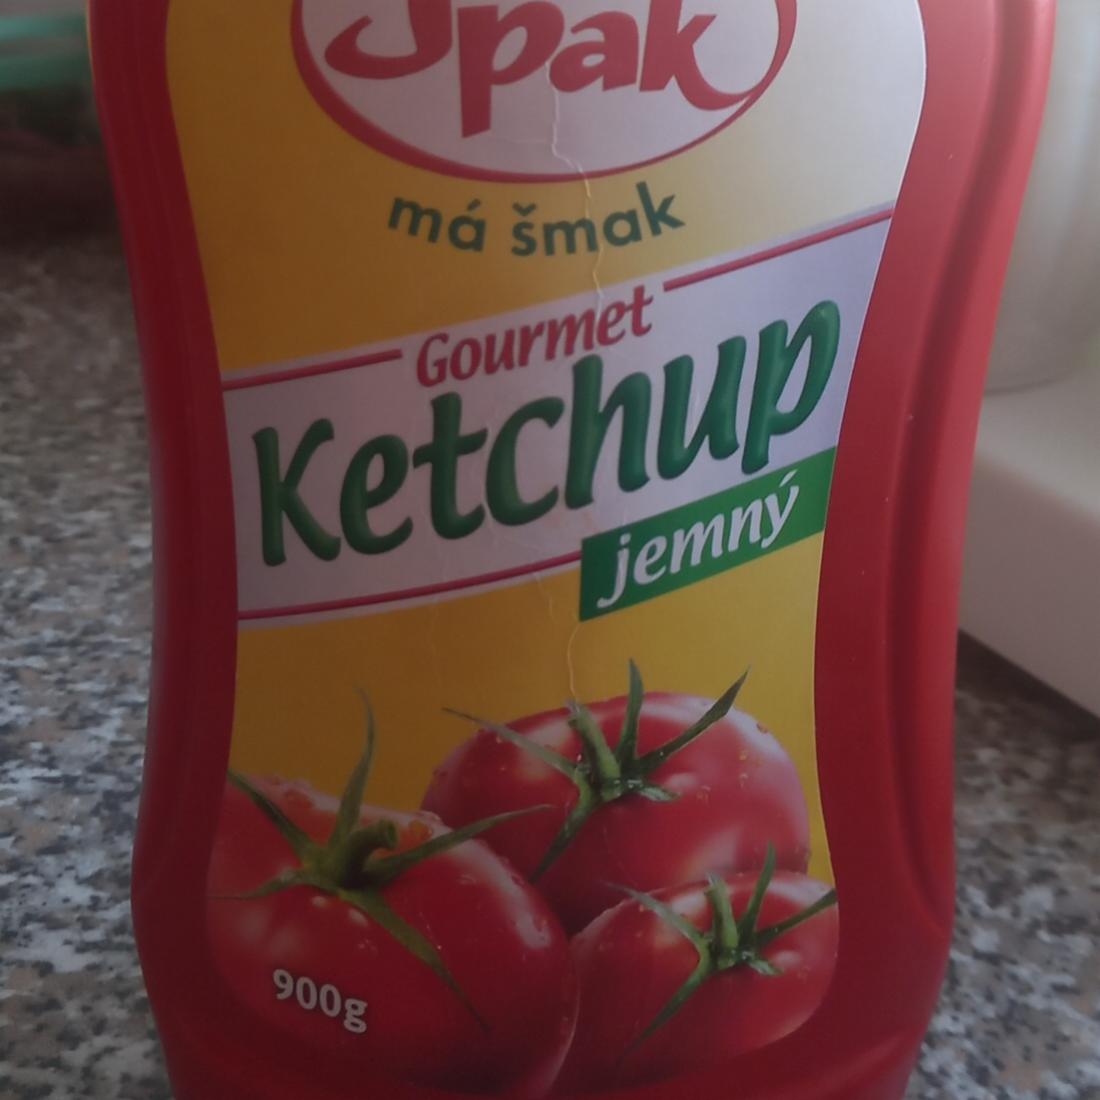 Fotografie - Gourmet Ketchup jemný Spak